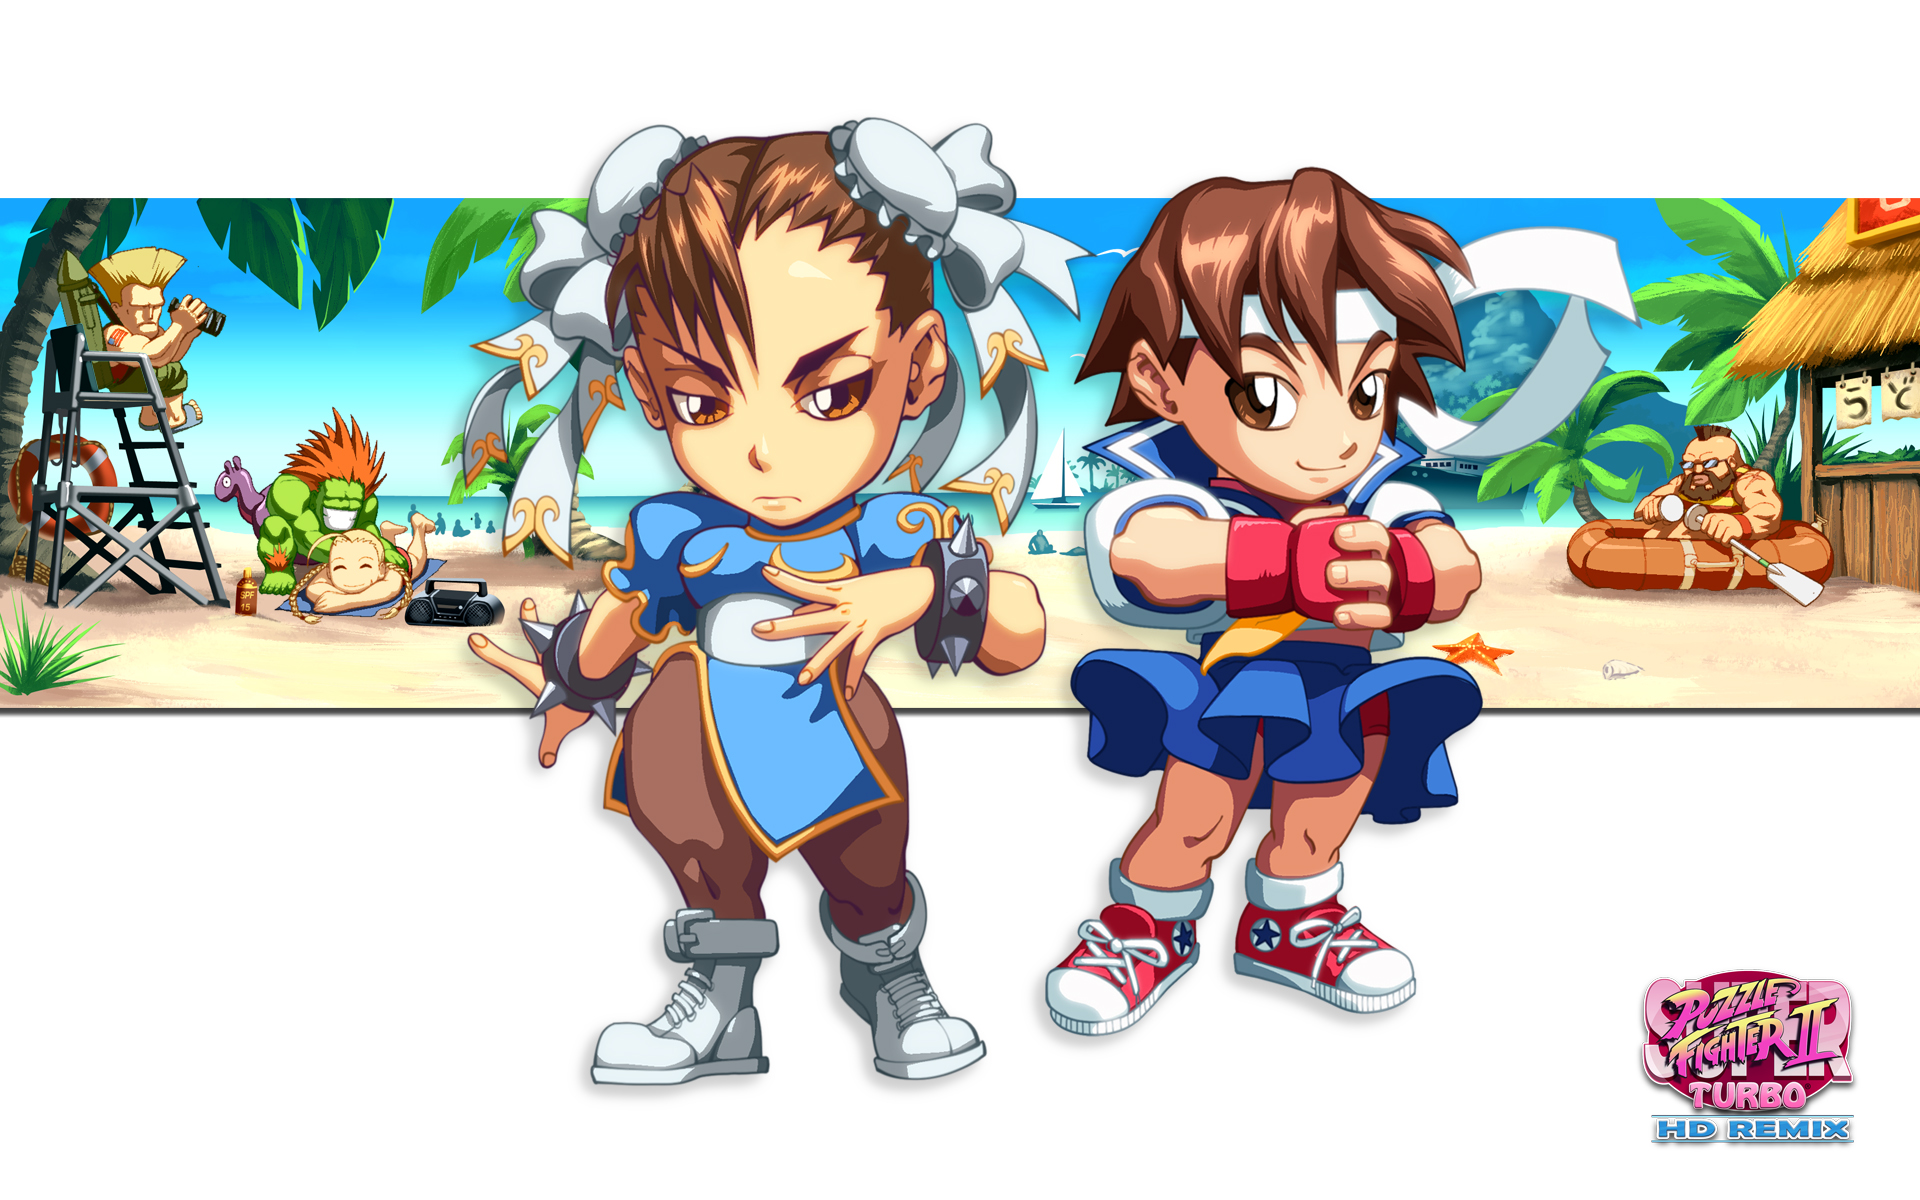 Chun-Li and Sakura Kasugano from Street Fighter on a colorful desktop wallpaper.